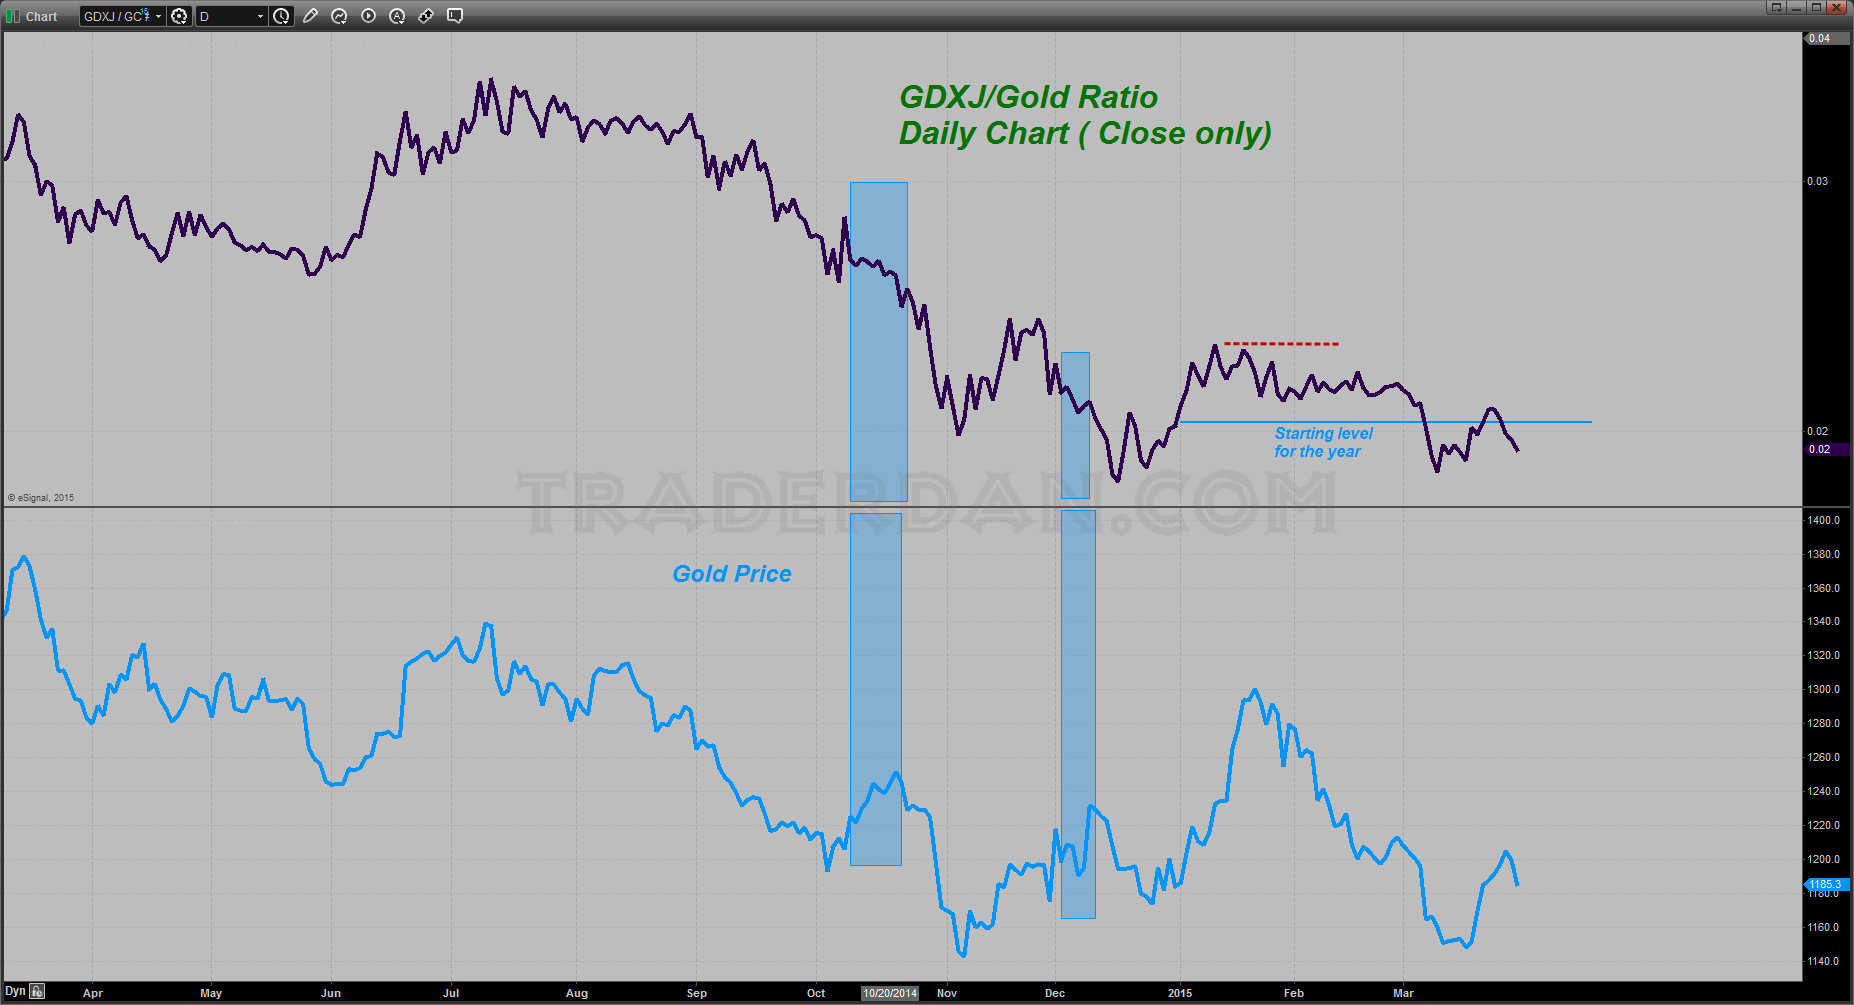 GDXJ/Gold Ratio Daily